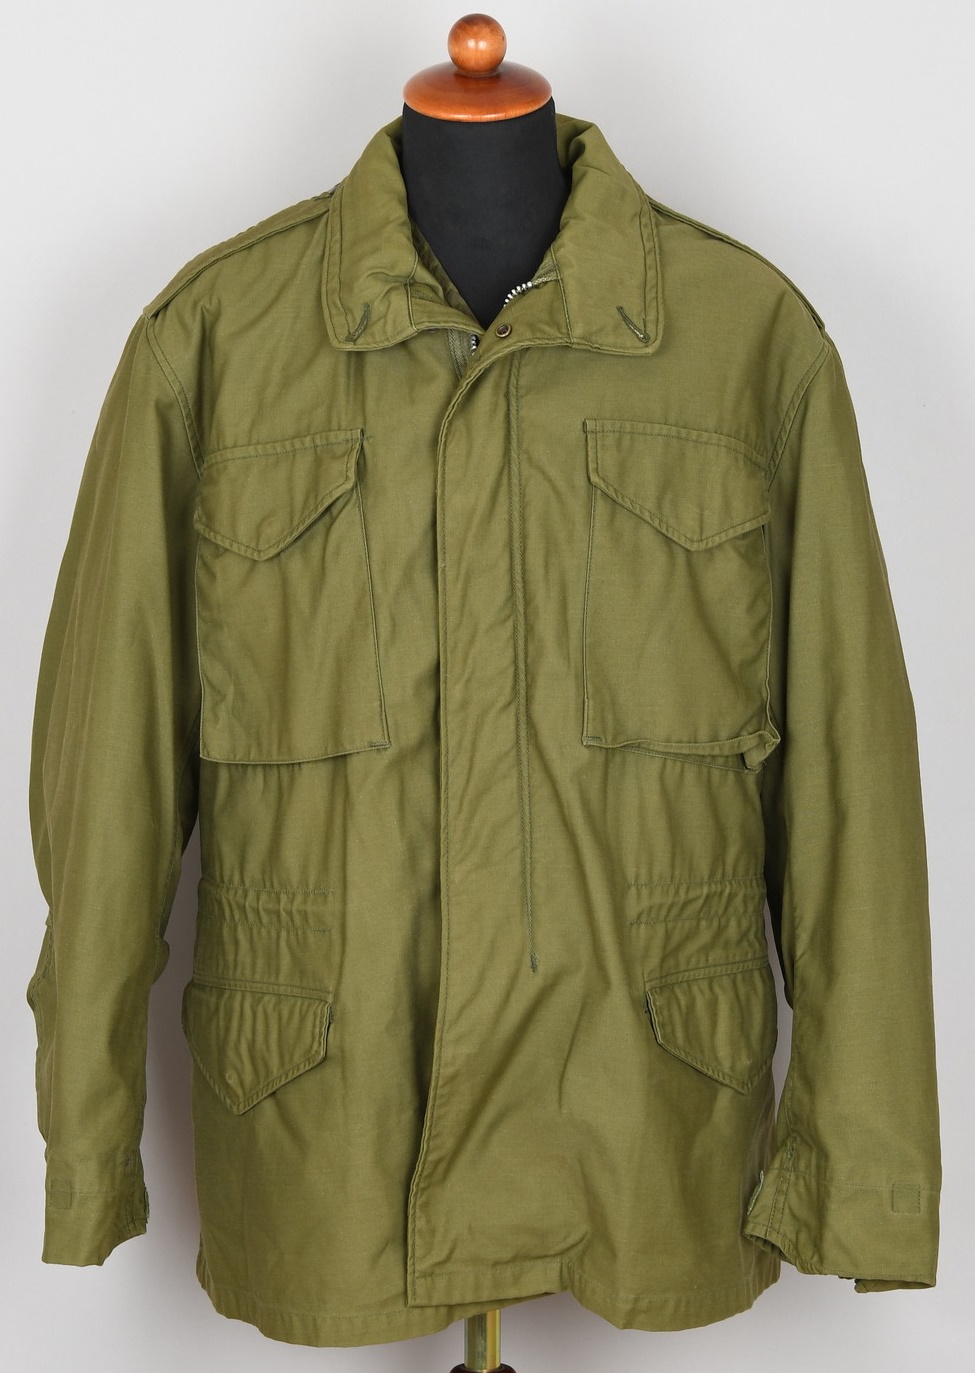 US Vietnam War Army Issue M65 Field Coat